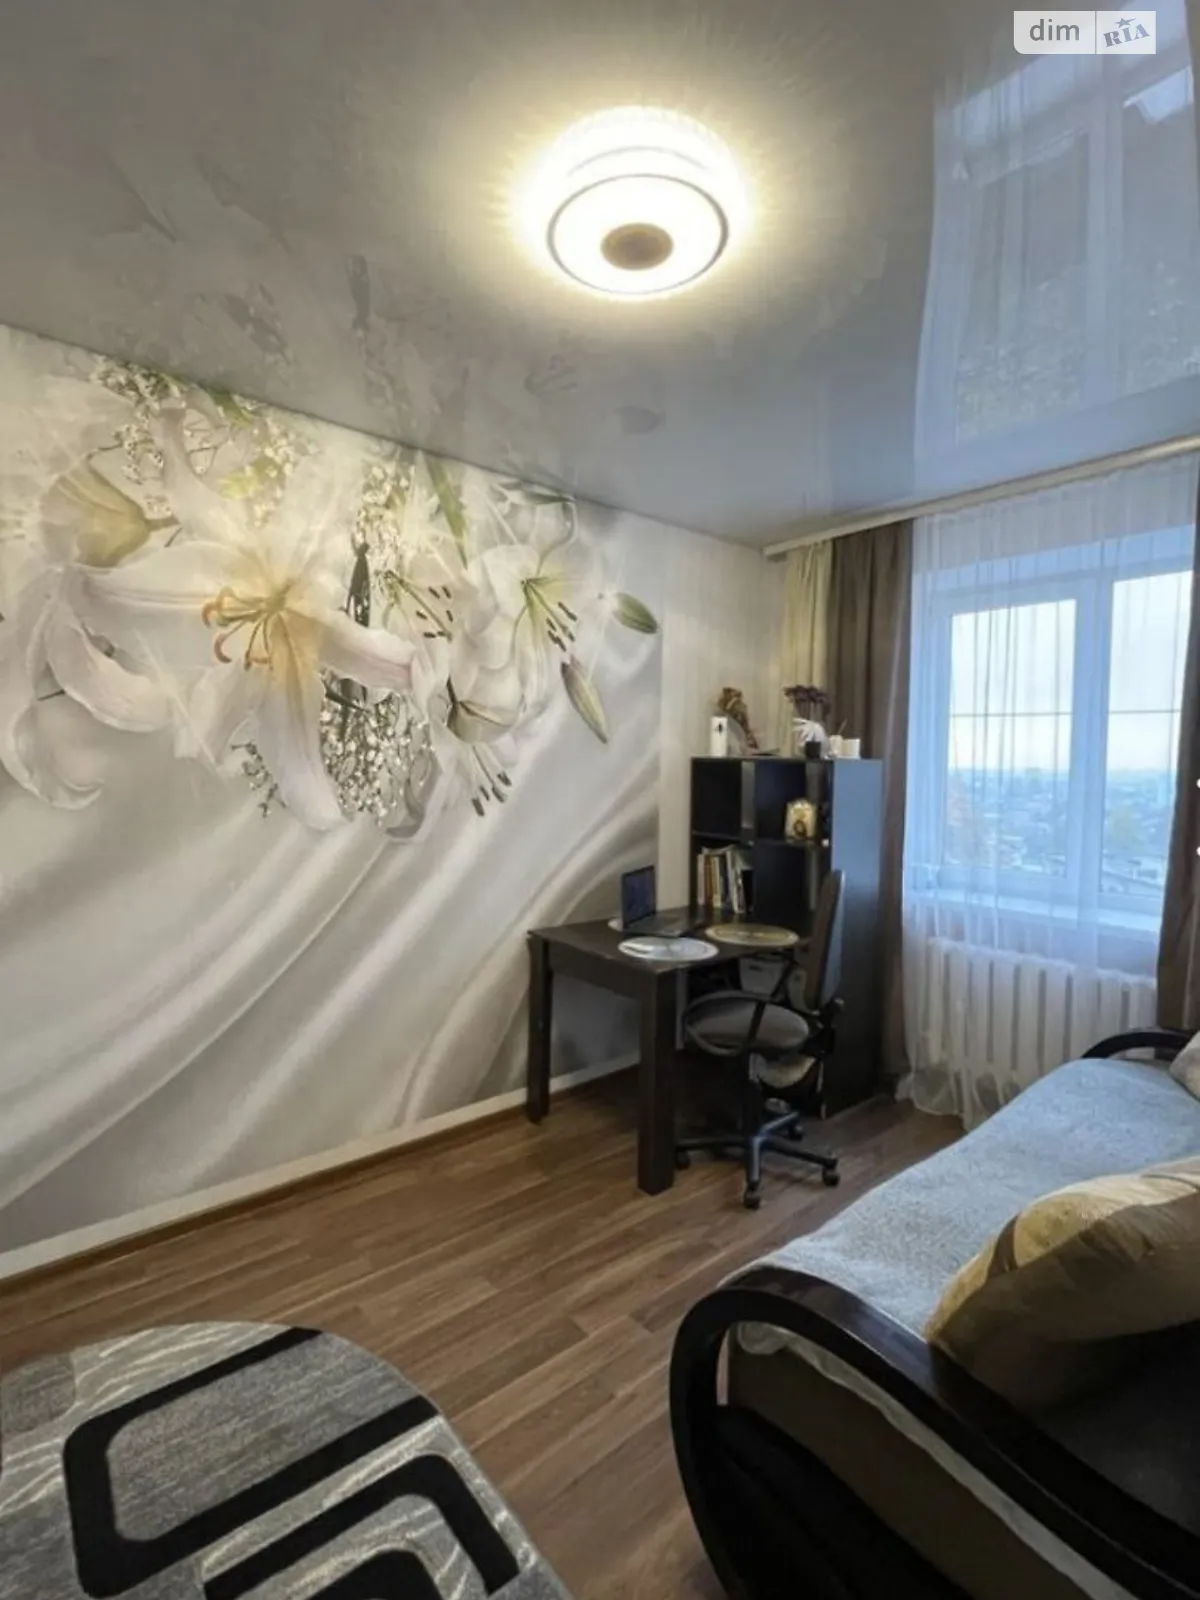 Продается комната 26 кв. м в Ровно - фото 3